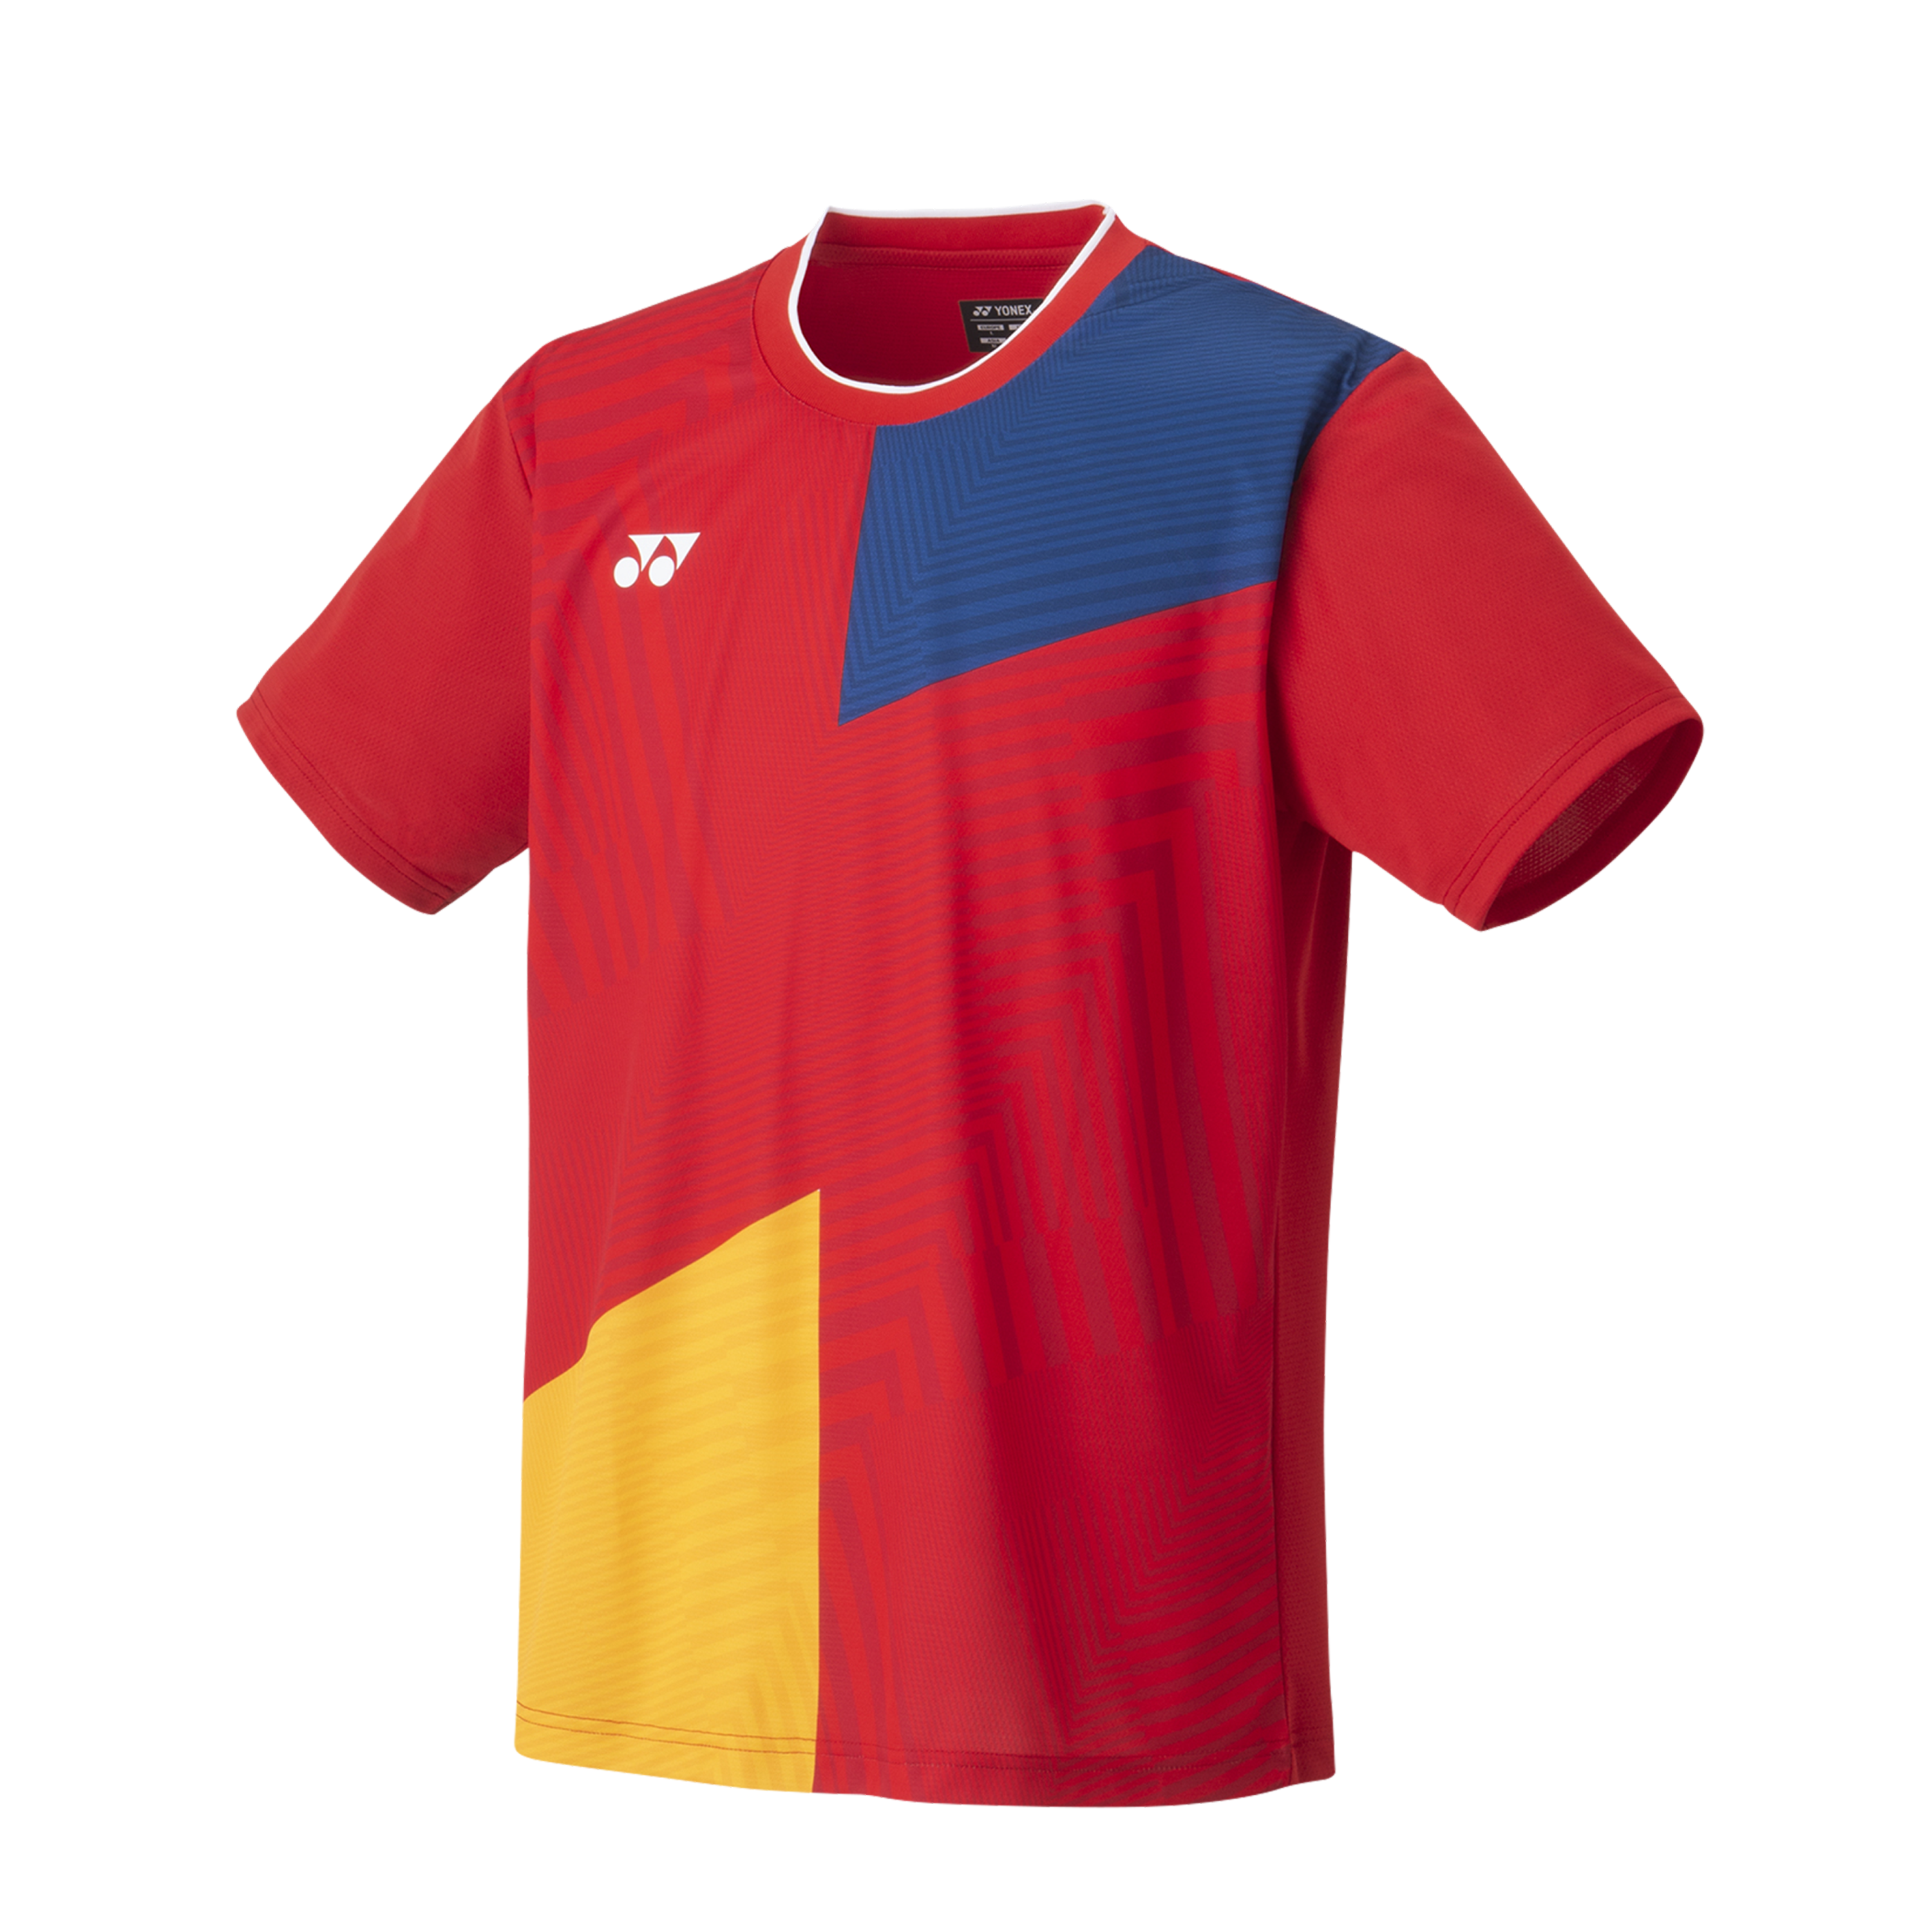 Yonex Premium Badminton/ Sports Shirt 10517 Ruby Red UNISEX